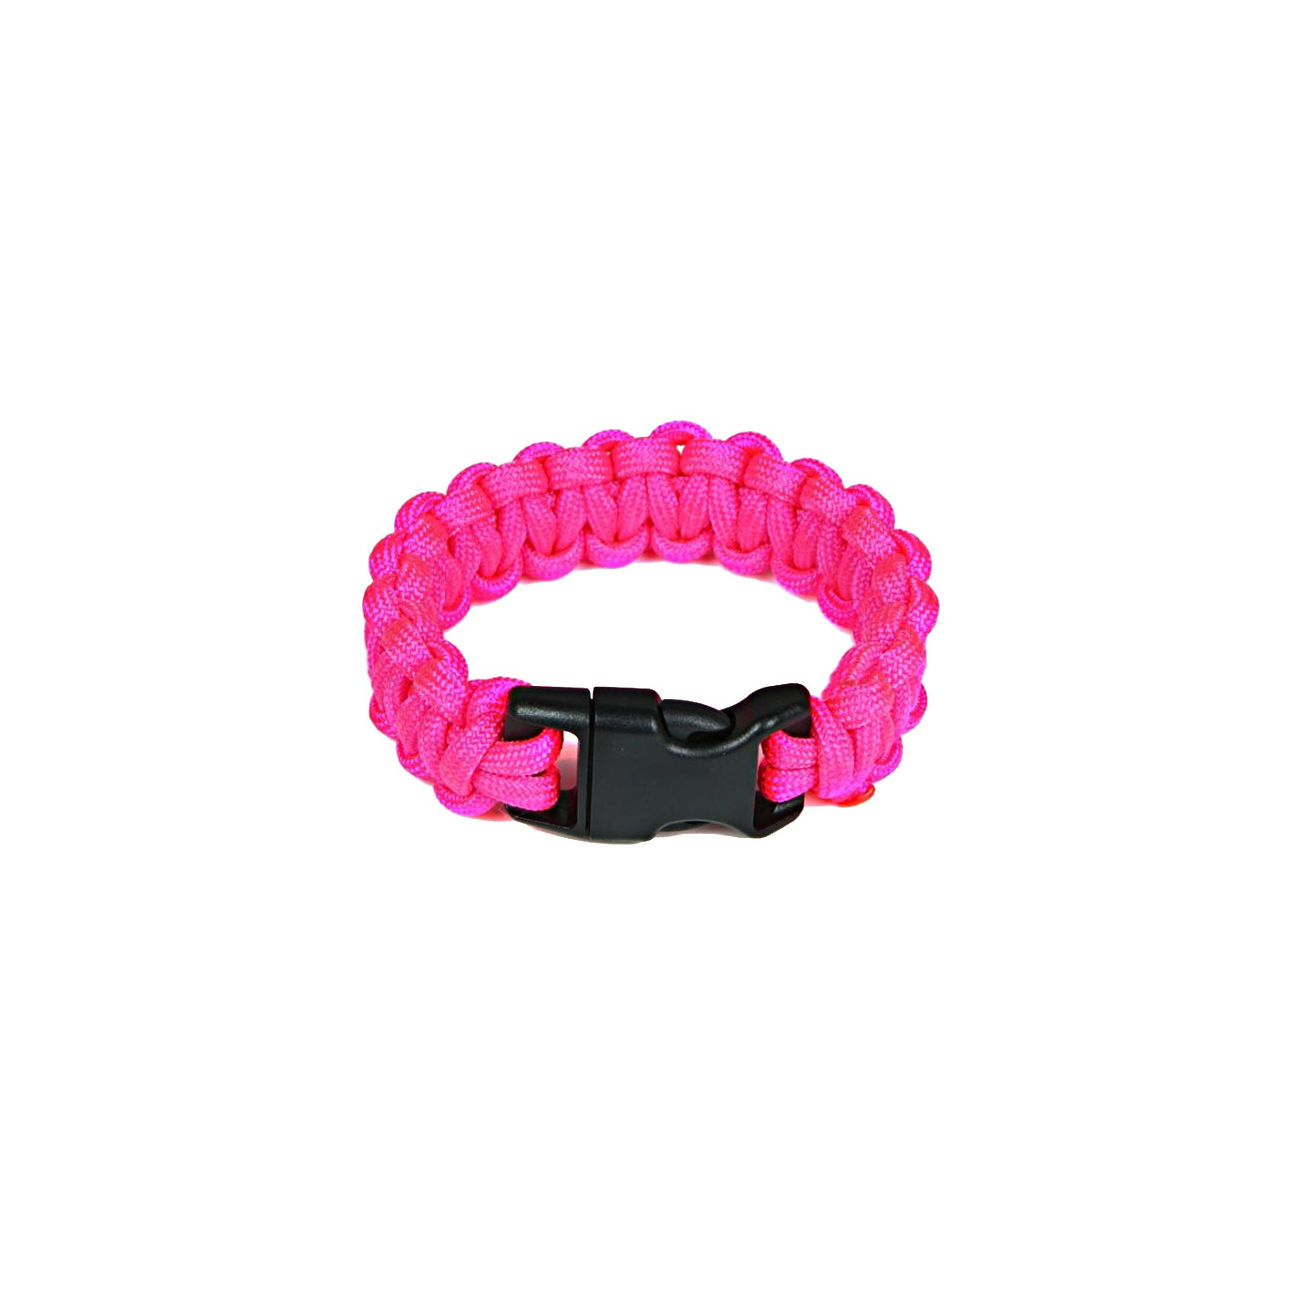 Mil-Spec Cords Cobra Paracord Bracelet pink